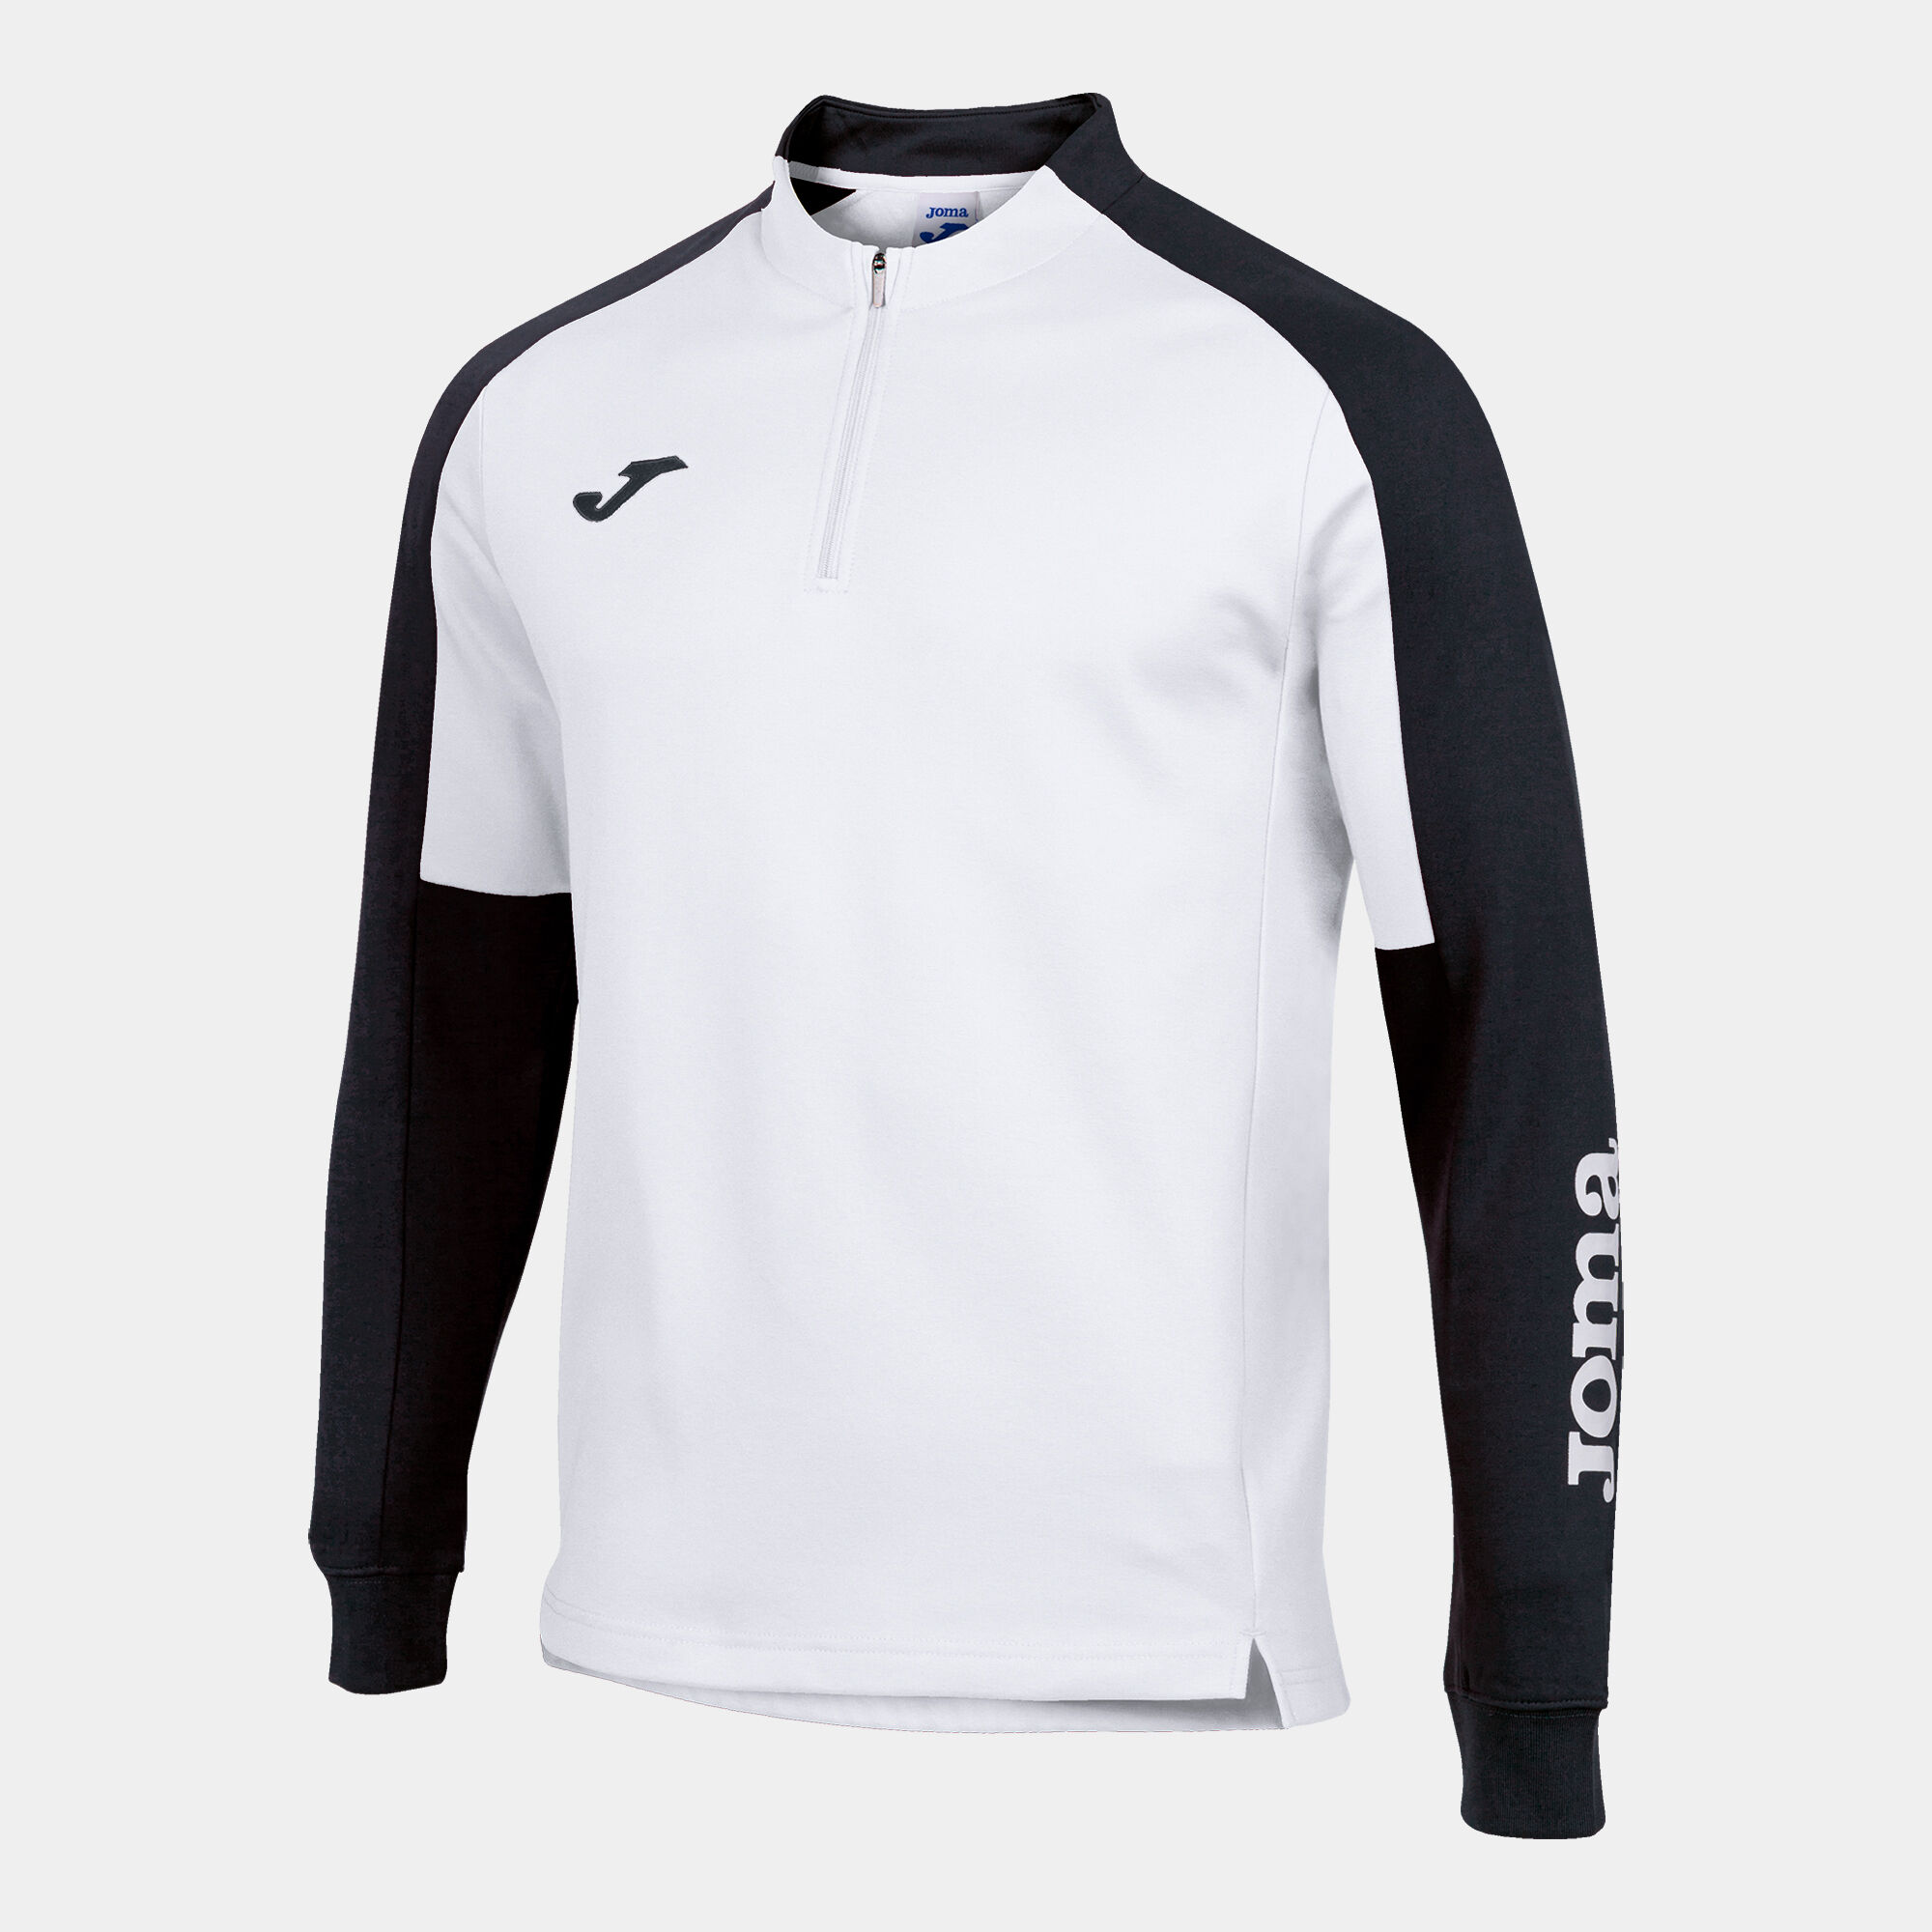 Sweat-shirt homme Eco Championship blanc noir